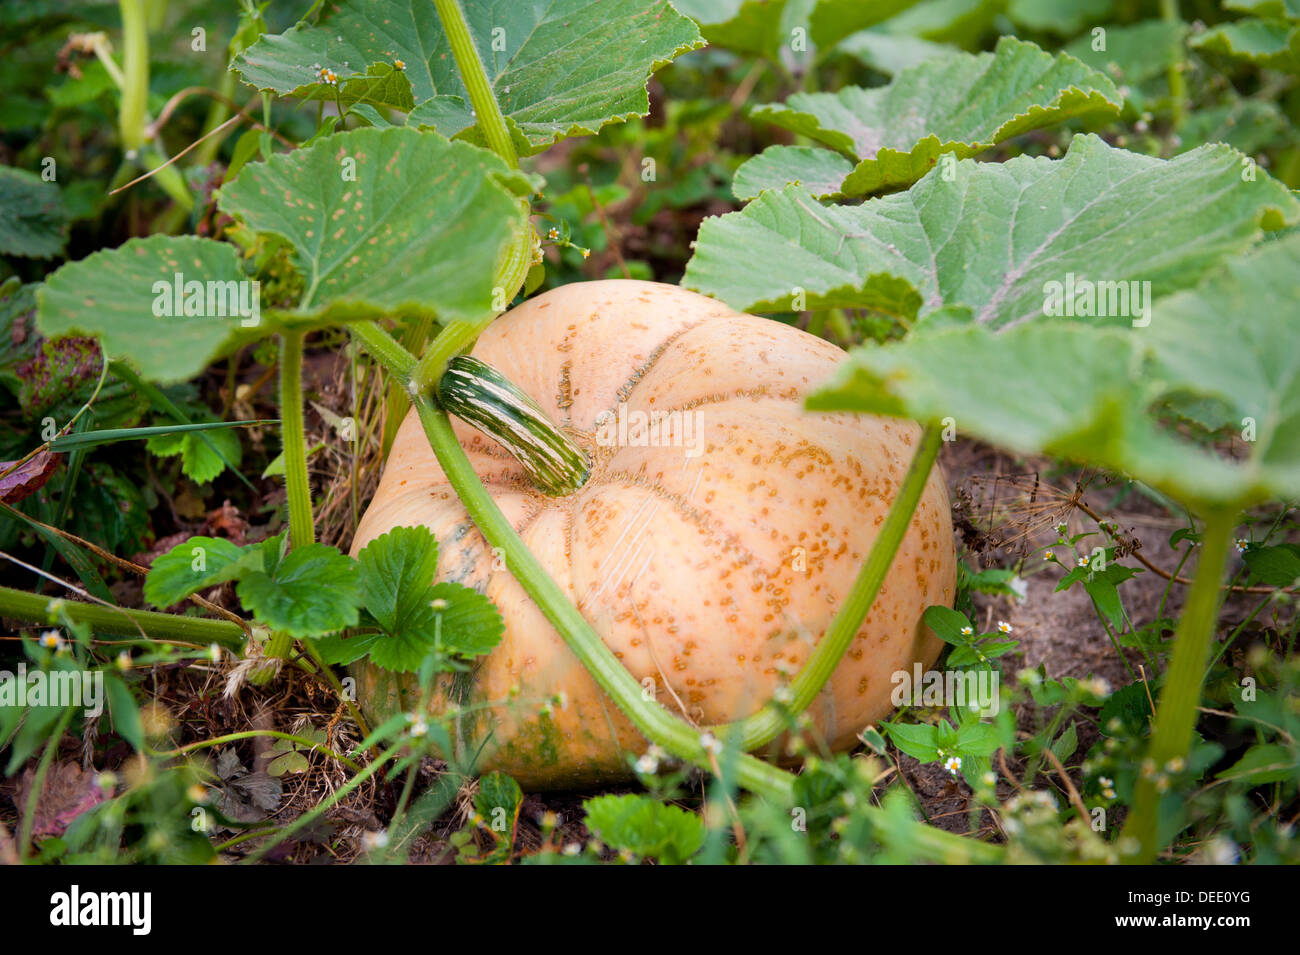 Single large pumpkin grow in ground Stock Photo